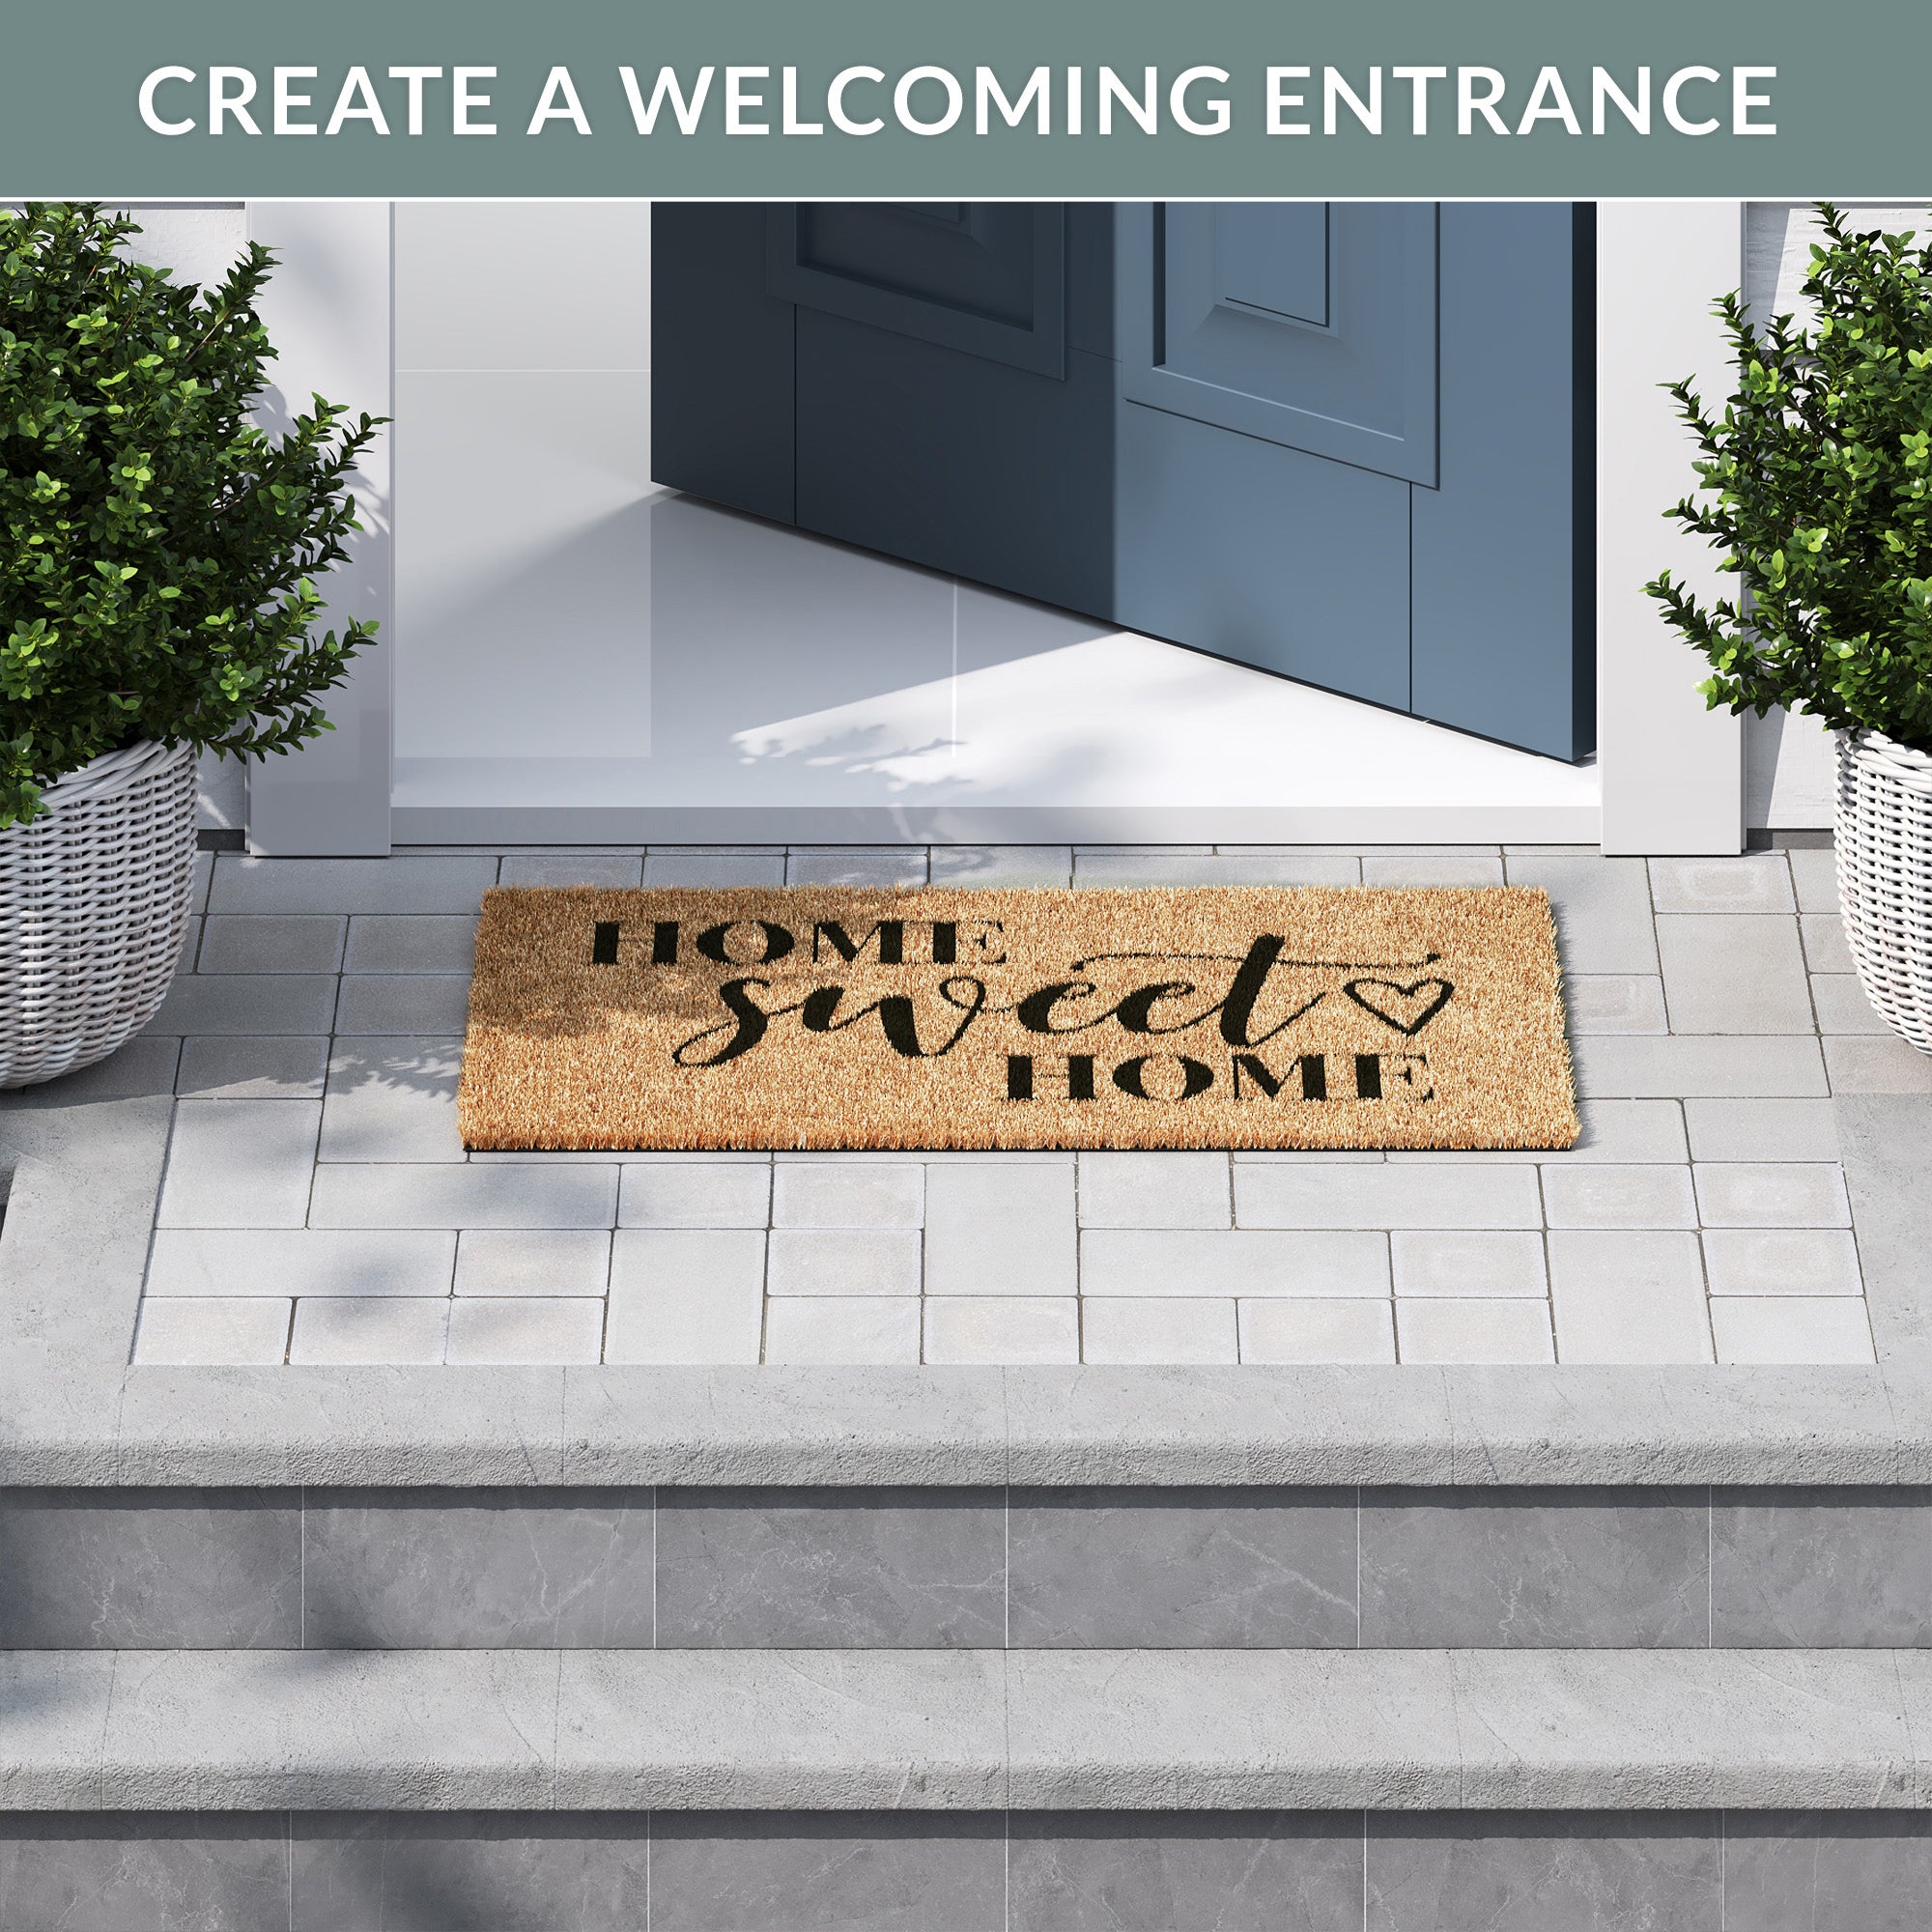 Barnyard Designs 'Gather' Doormat Welcome Mat for Outdoors, Large Front Door  Entrance Mat, 30x17, Brown